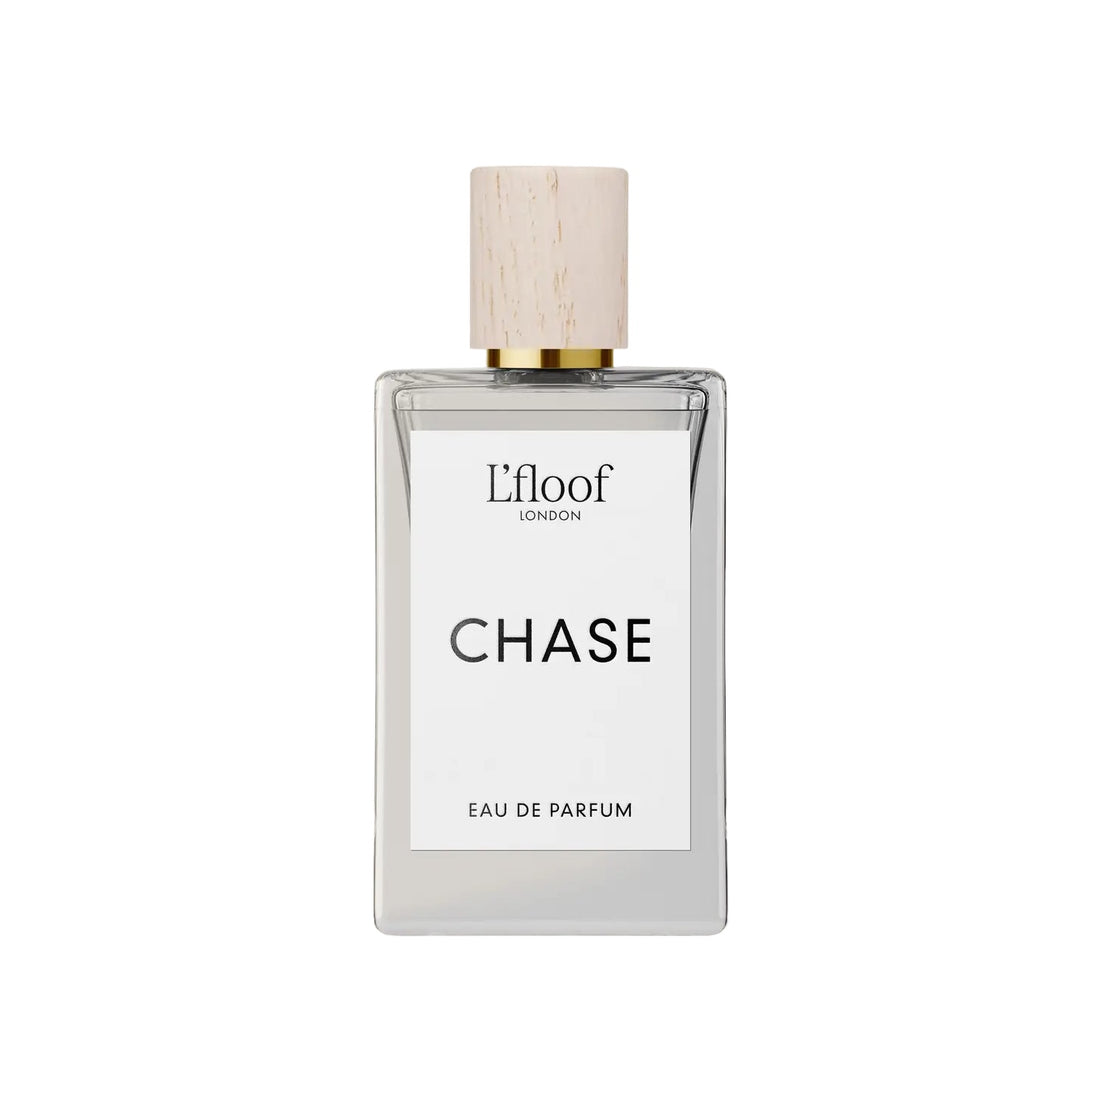 Dog Perfume Fragrance Spray l Chase